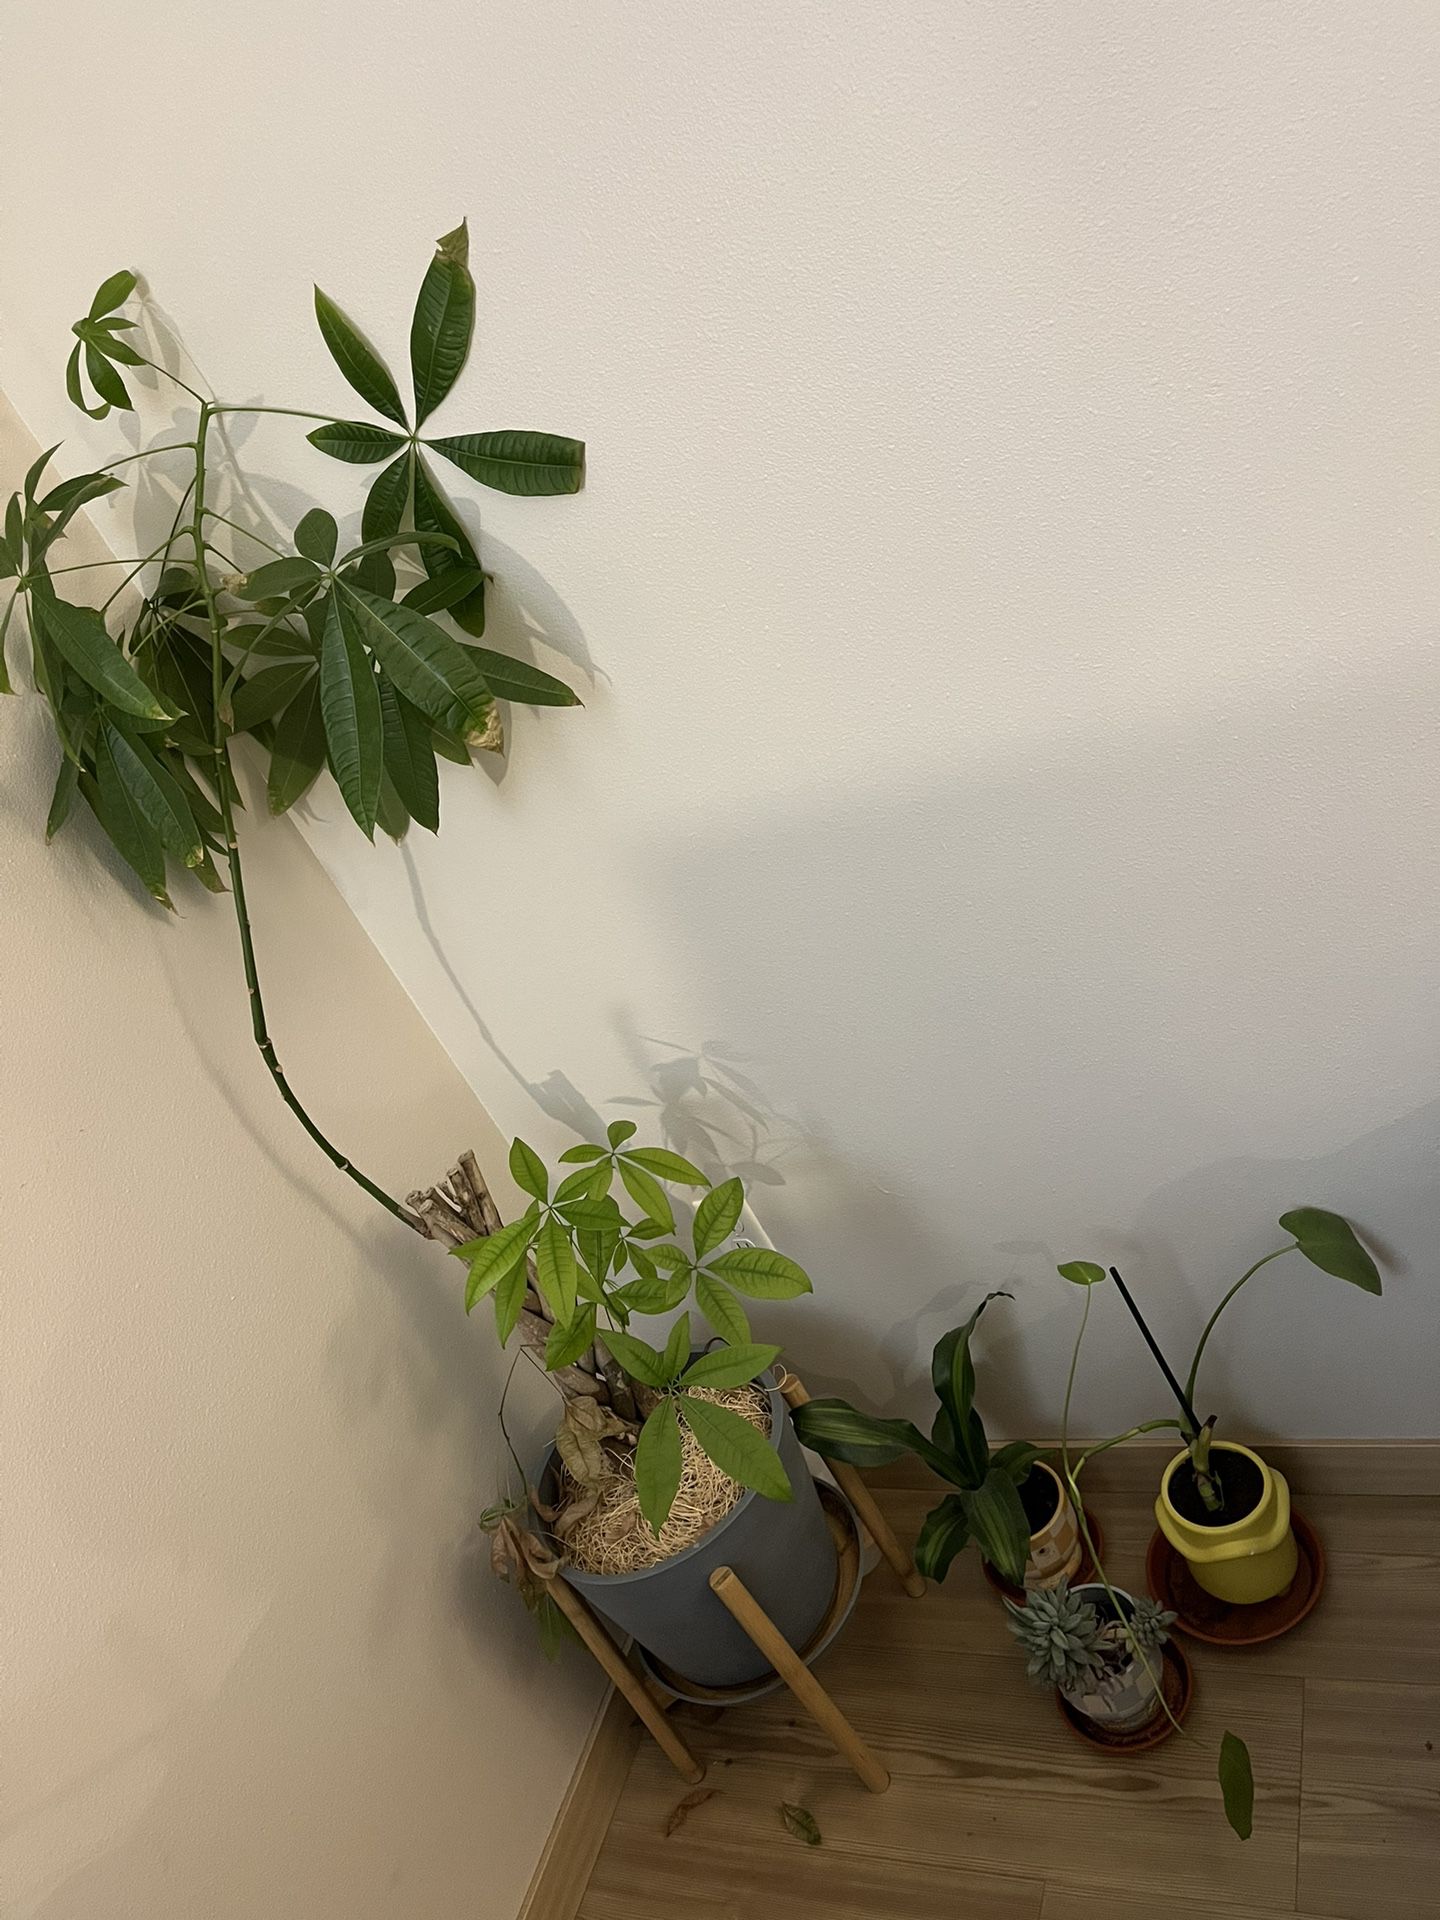 PENDING - Free Plants